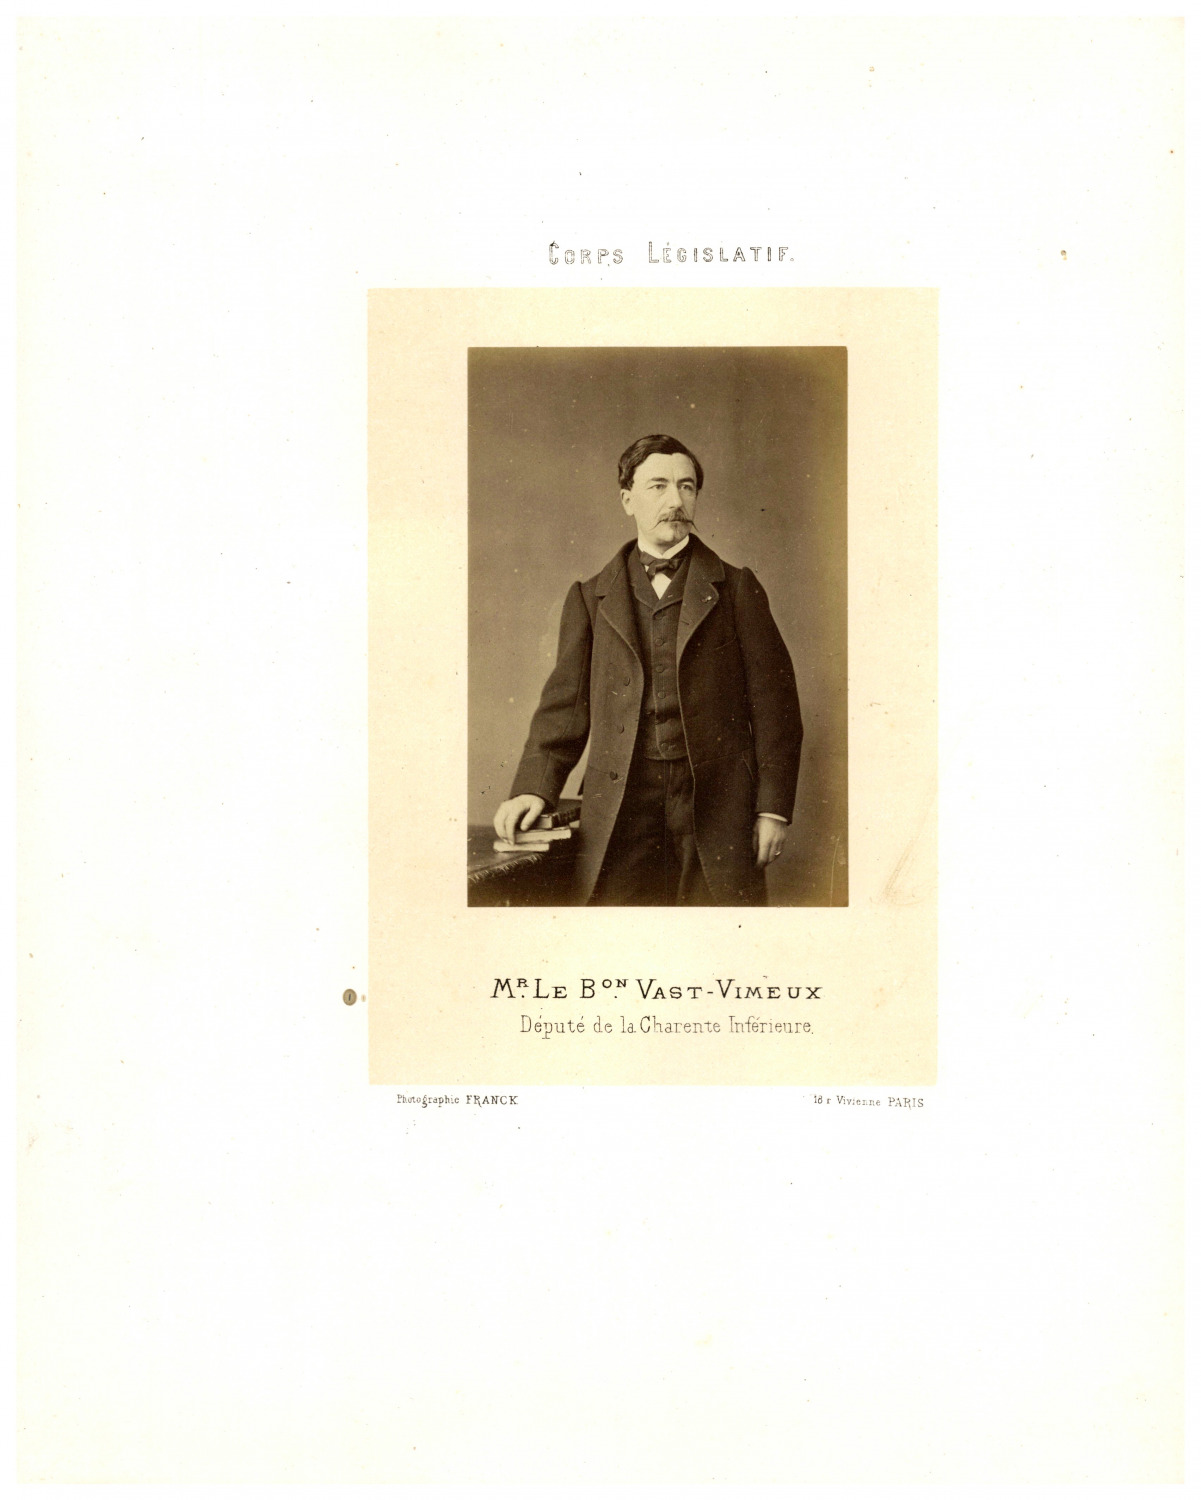 Mr. Le Baron Vast-Vimeux, Member of Parliament for the Charente Inferior Vintage print, print